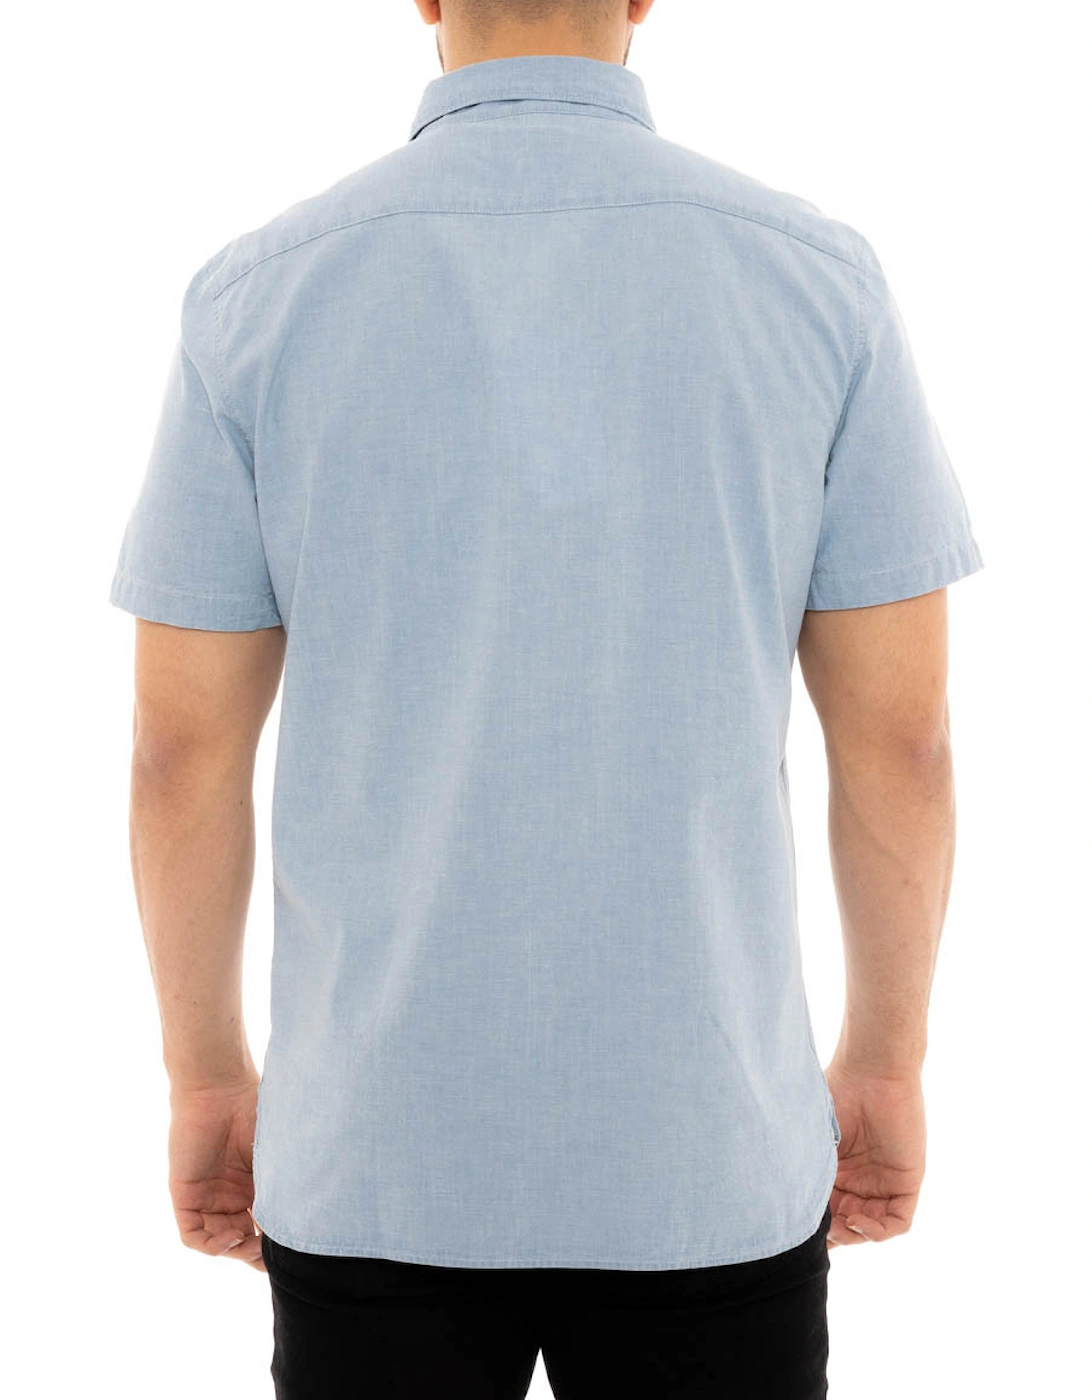 Mens Short Sleeve Chambray Shirt (Light Blue)